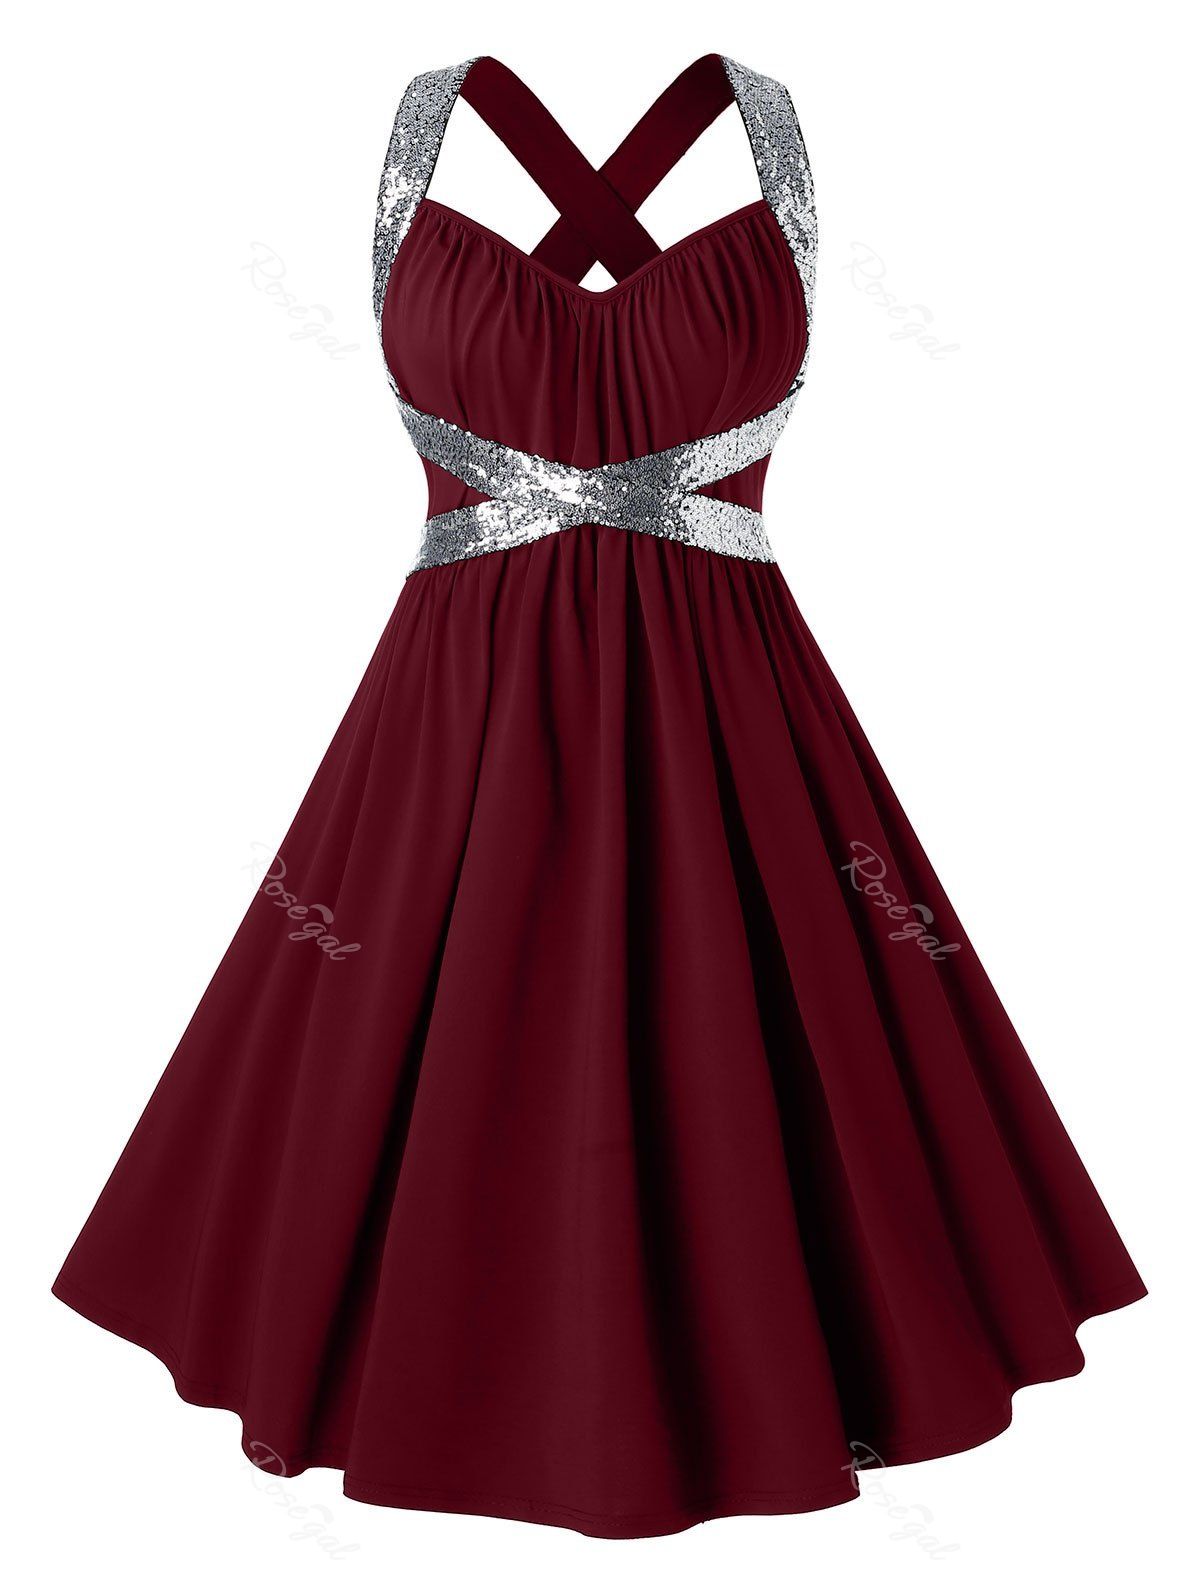 1x formal dresses